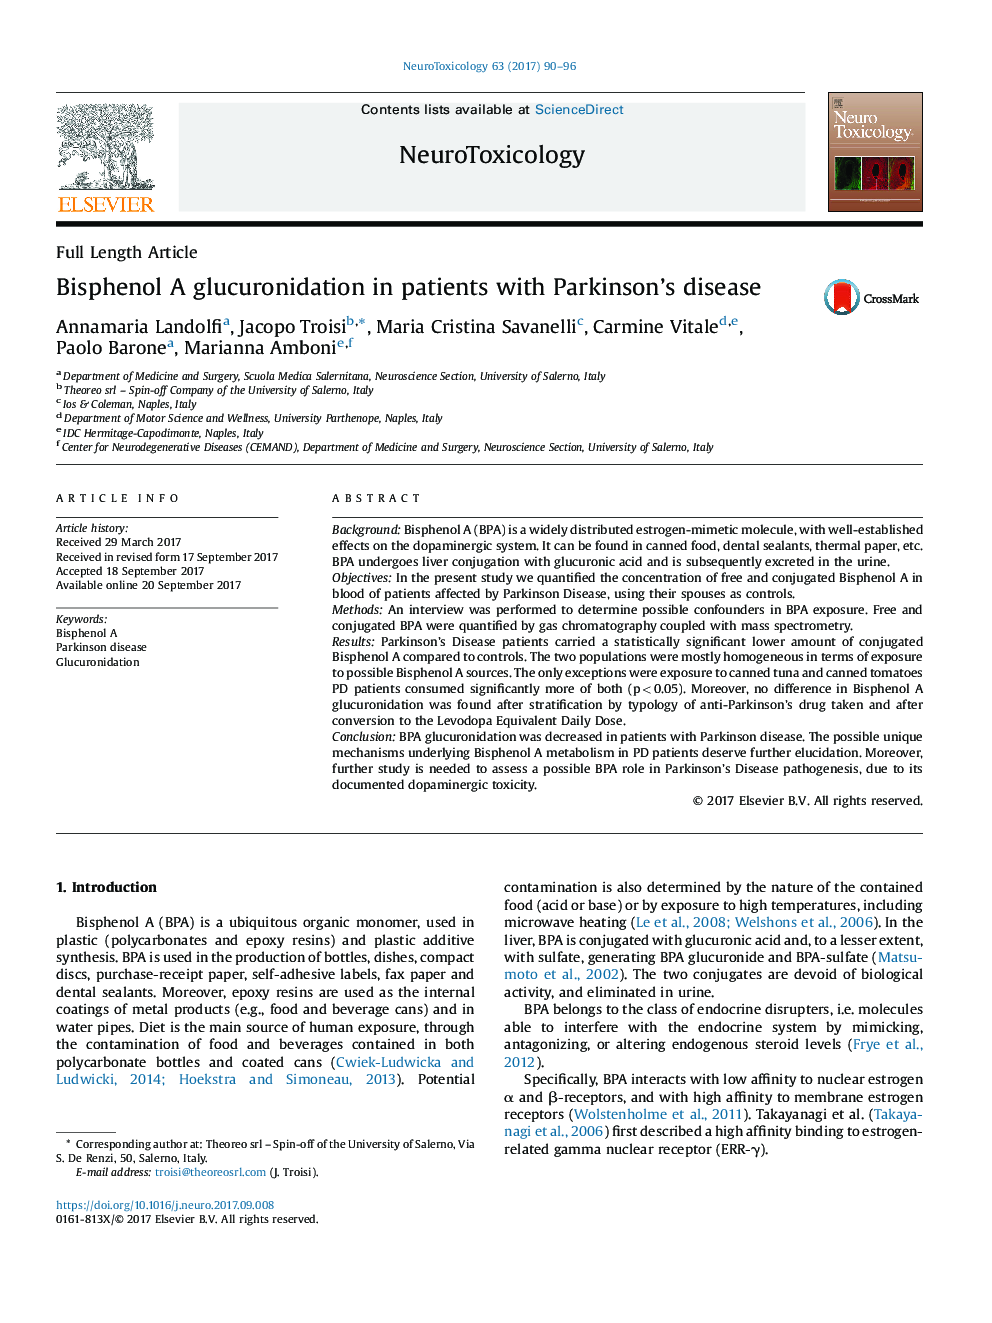 Bisphenol A glucuronidation in patients with Parkinson's disease